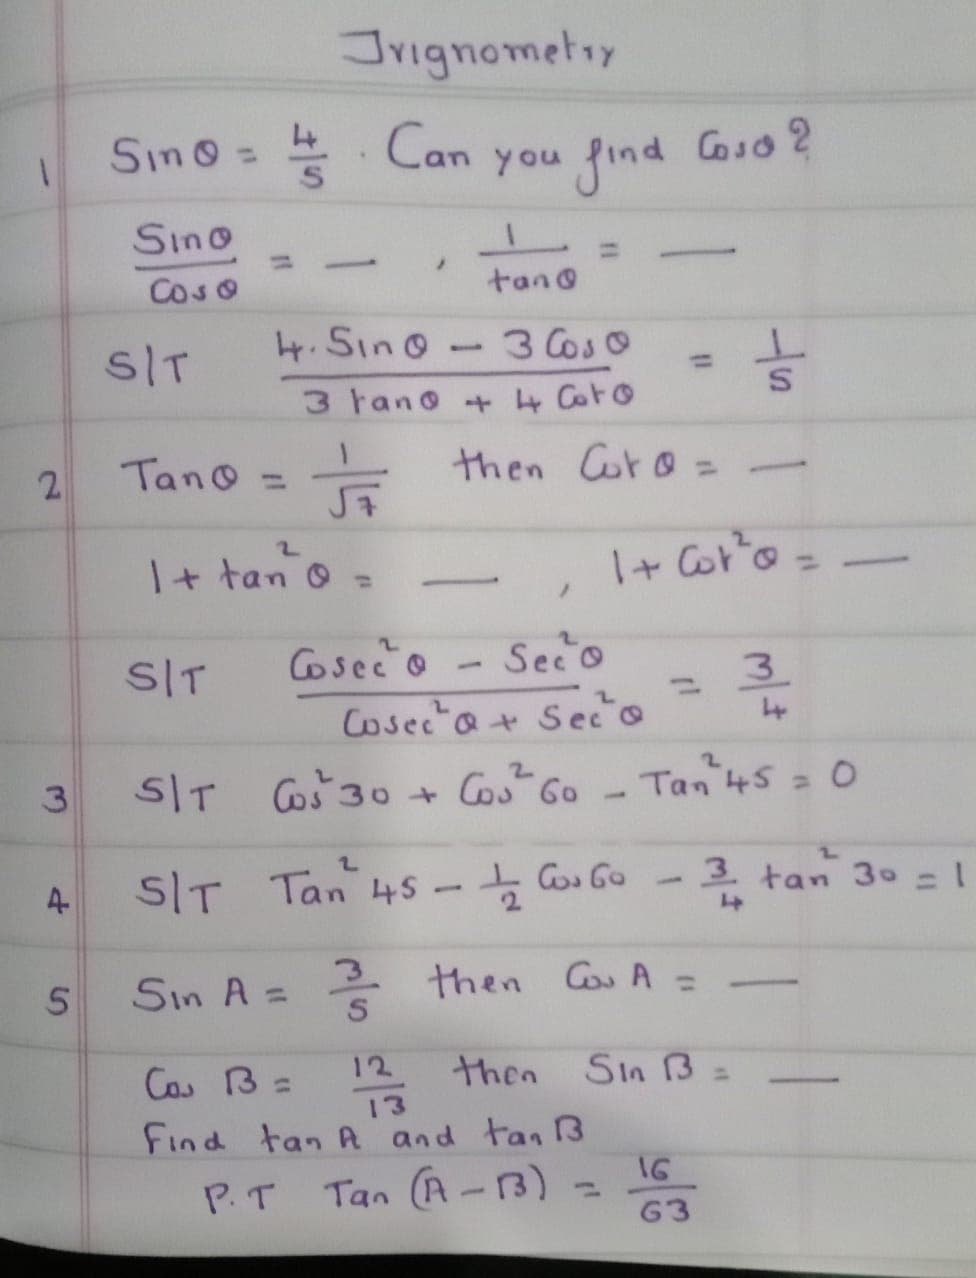 Jrignometry
Can
Sino=5
you find
Coso 2
Sino
%3D
%3D
Coso
tano
SIT
4.Sino- 3 Coso
%3D
3 tano +4 Coro
2.
Tano =
then Coro:
I+ tan o =
I+ Cot'o =
%3D
SIT
Cosec'o
Seco
3.
%3D
Cosec a+ Seco
2.
2.
3
5IT Coš 30 + Cos Go
Tan 45 = 0
SIT Tan 45 Co Go
-후 tan 30 =1
3.
%3D
Sin A =
3.
* then Co A =
%3D
Cos B=
12 then Sin B =
13
Find tan A and tan B3
P.T Tan (A -3)
16
%3D
63
